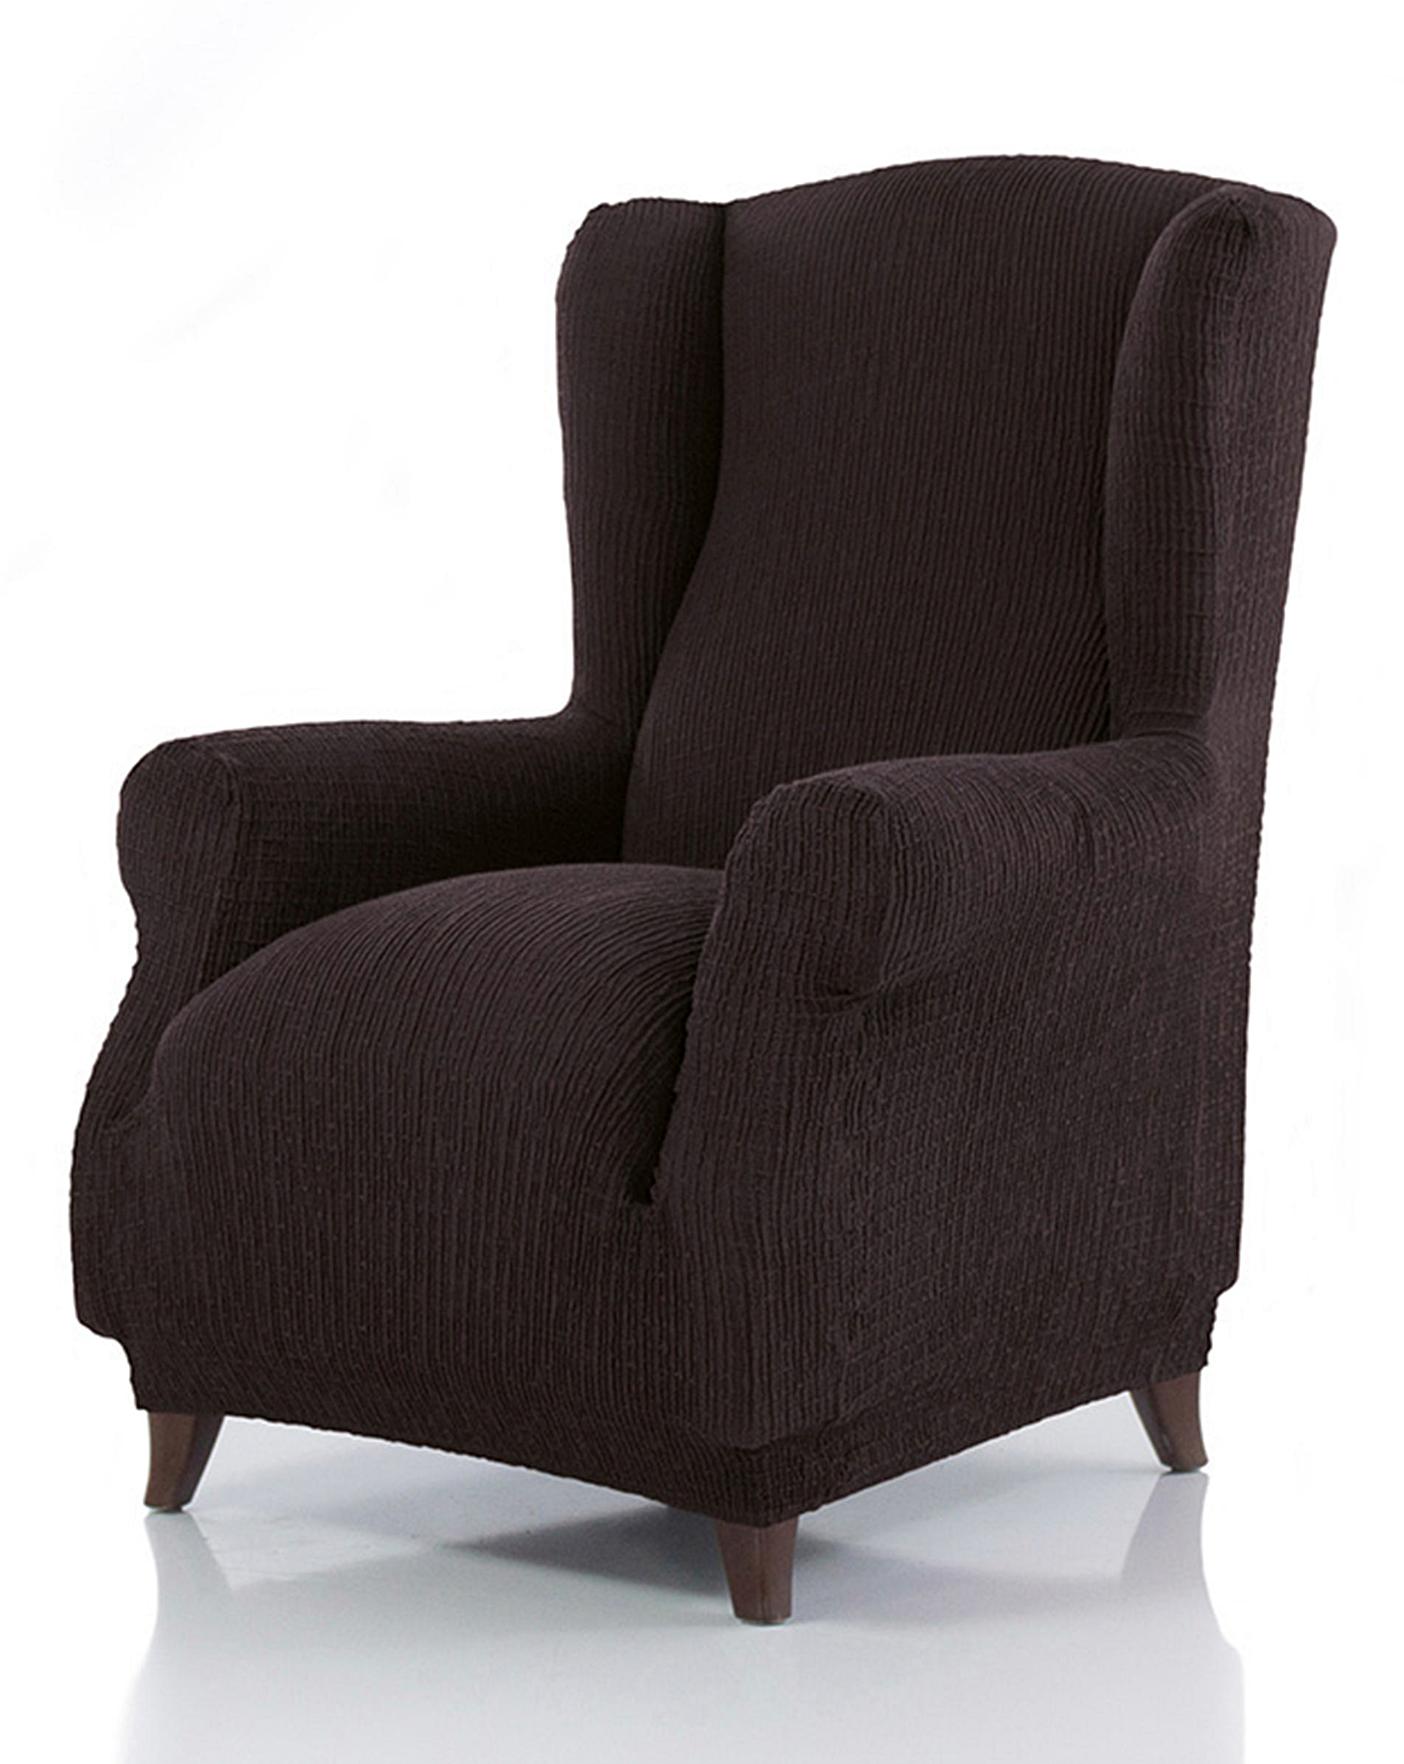 Удлиненное кресло. Chair Andora мягкое кресло Andorra. Кресло Parker Knoll: Froxfield.. Кресло с удлиненным сиденьем. Кресло 60 см.